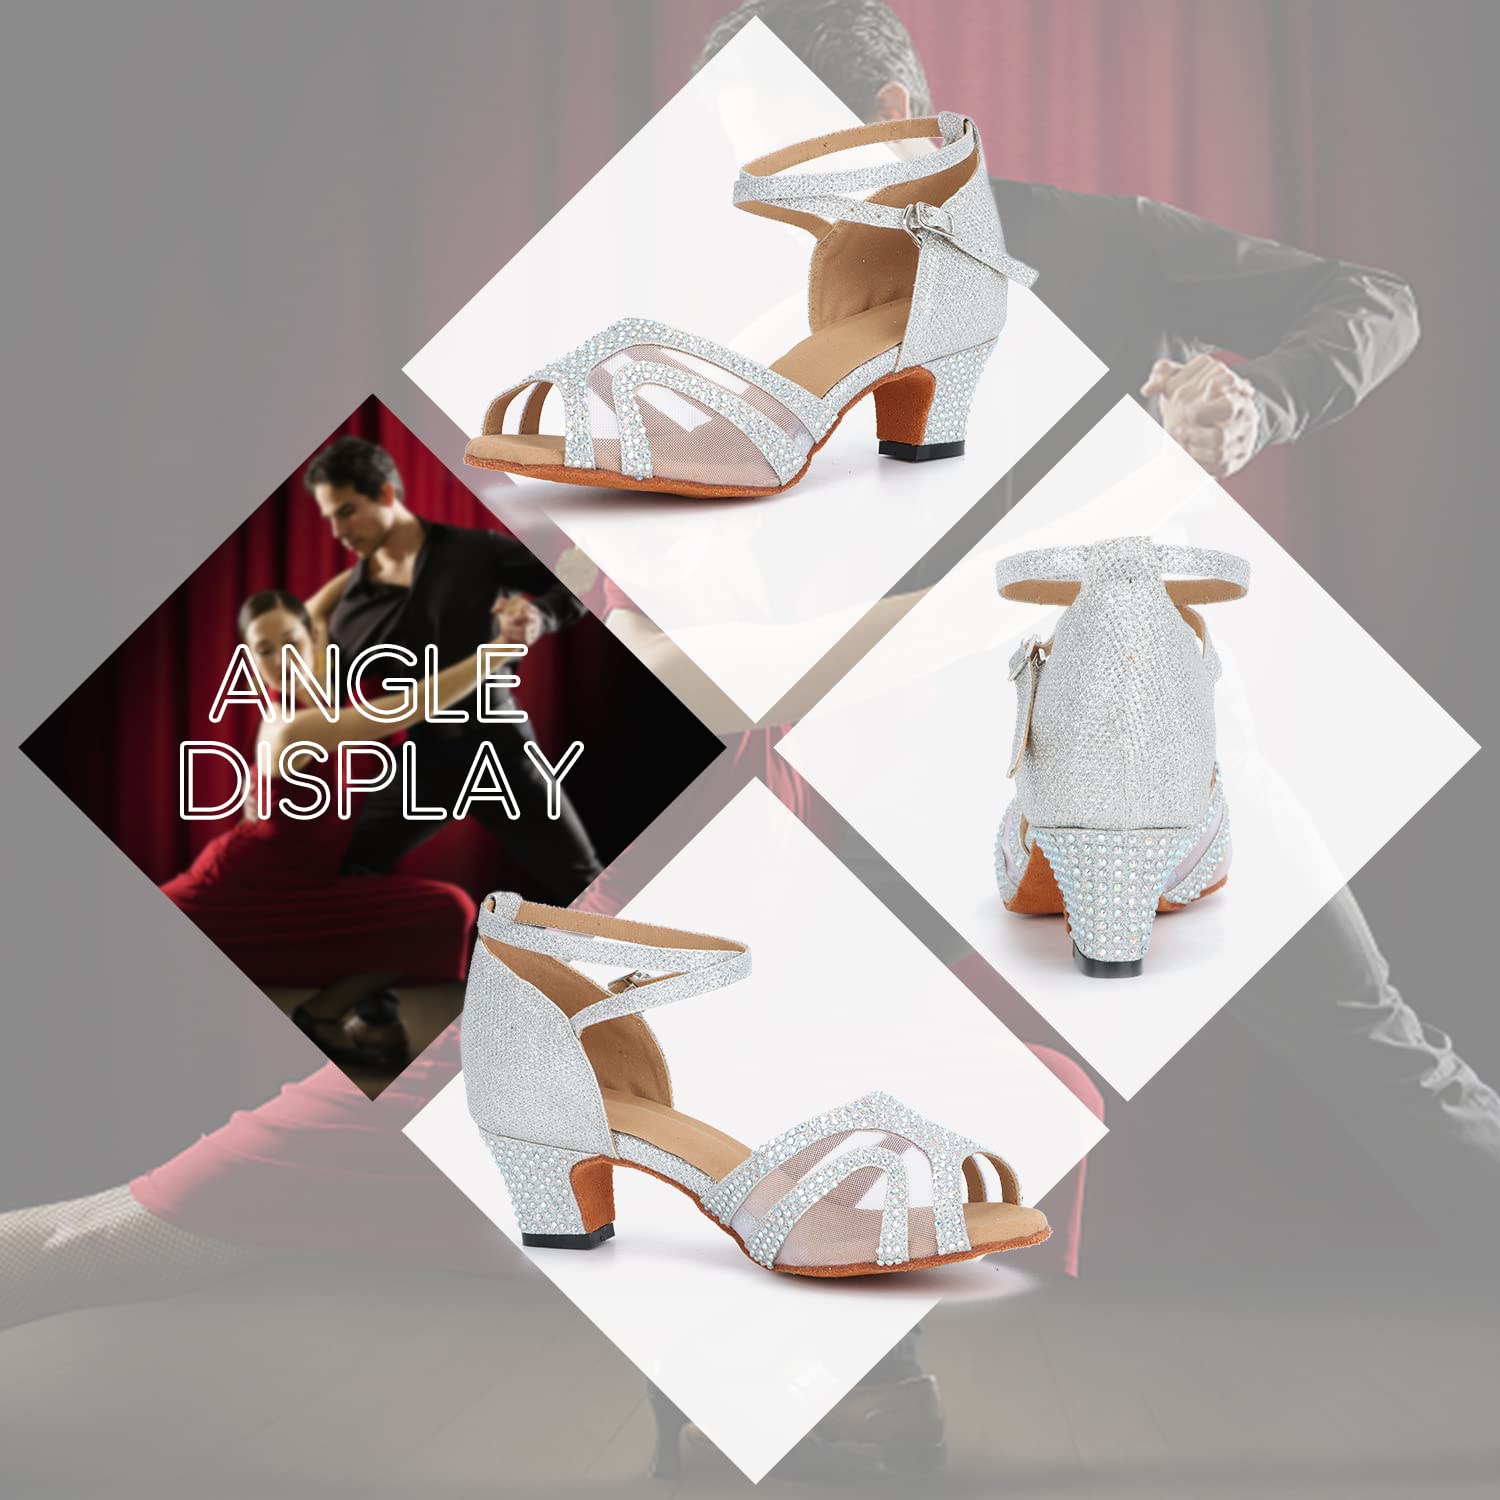 FUKZTE Womens Ballroom Dance Shoes for Social Salsa Latin Dance Dress Shoes Womens Open Toe Dancing Shoes,silver 1.97 inch heel,6 US